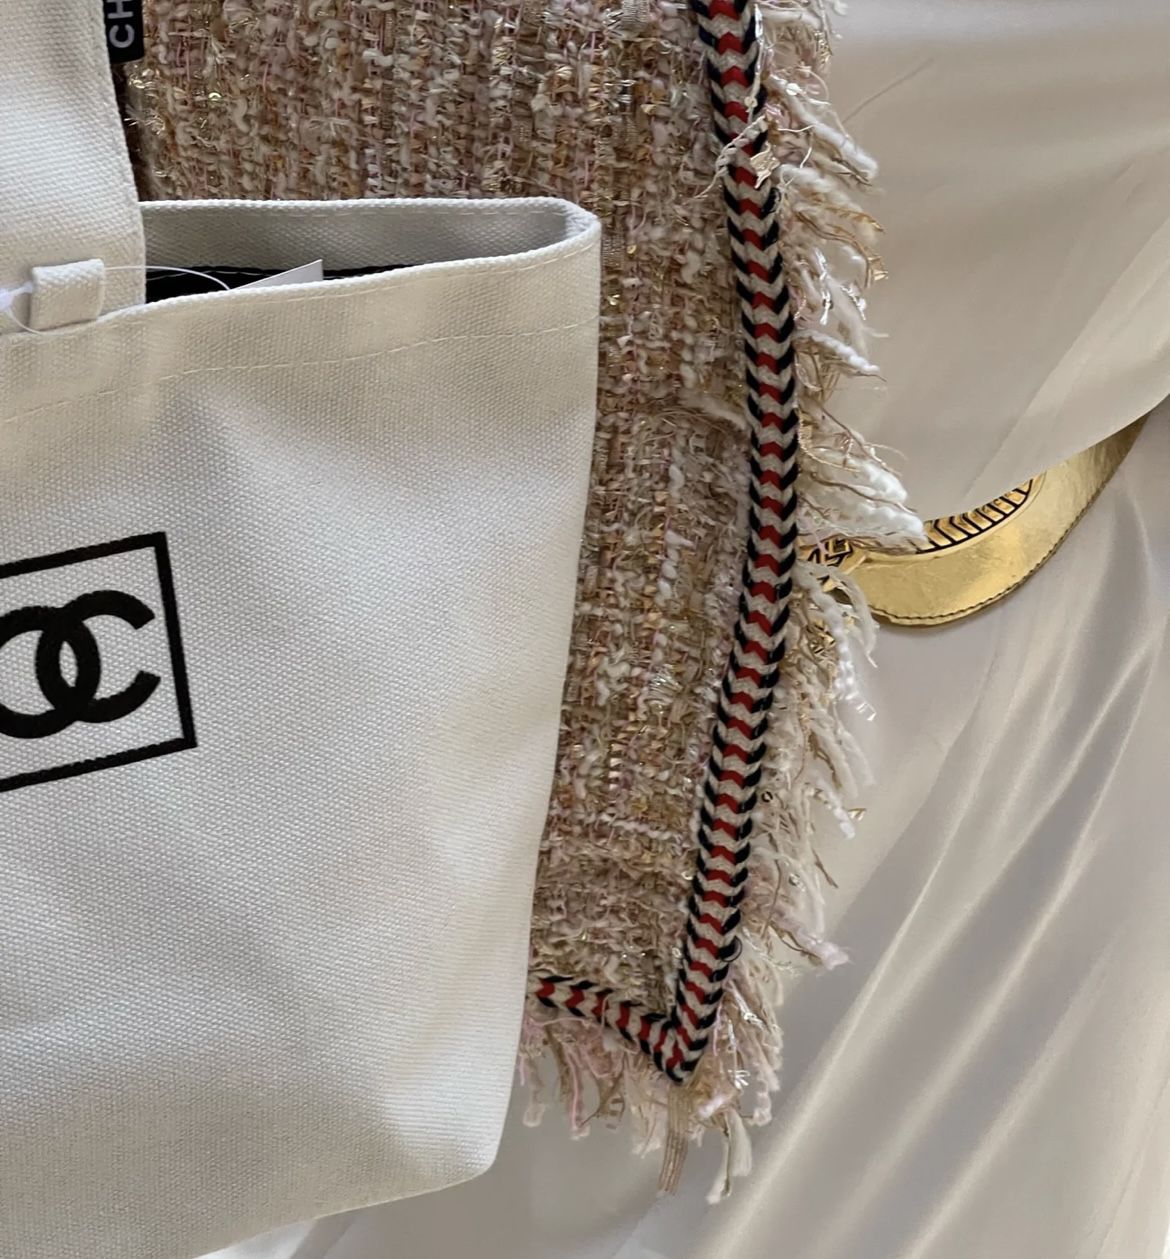 Chanel Gift Box Set for Sale in La Costa, CA - OfferUp